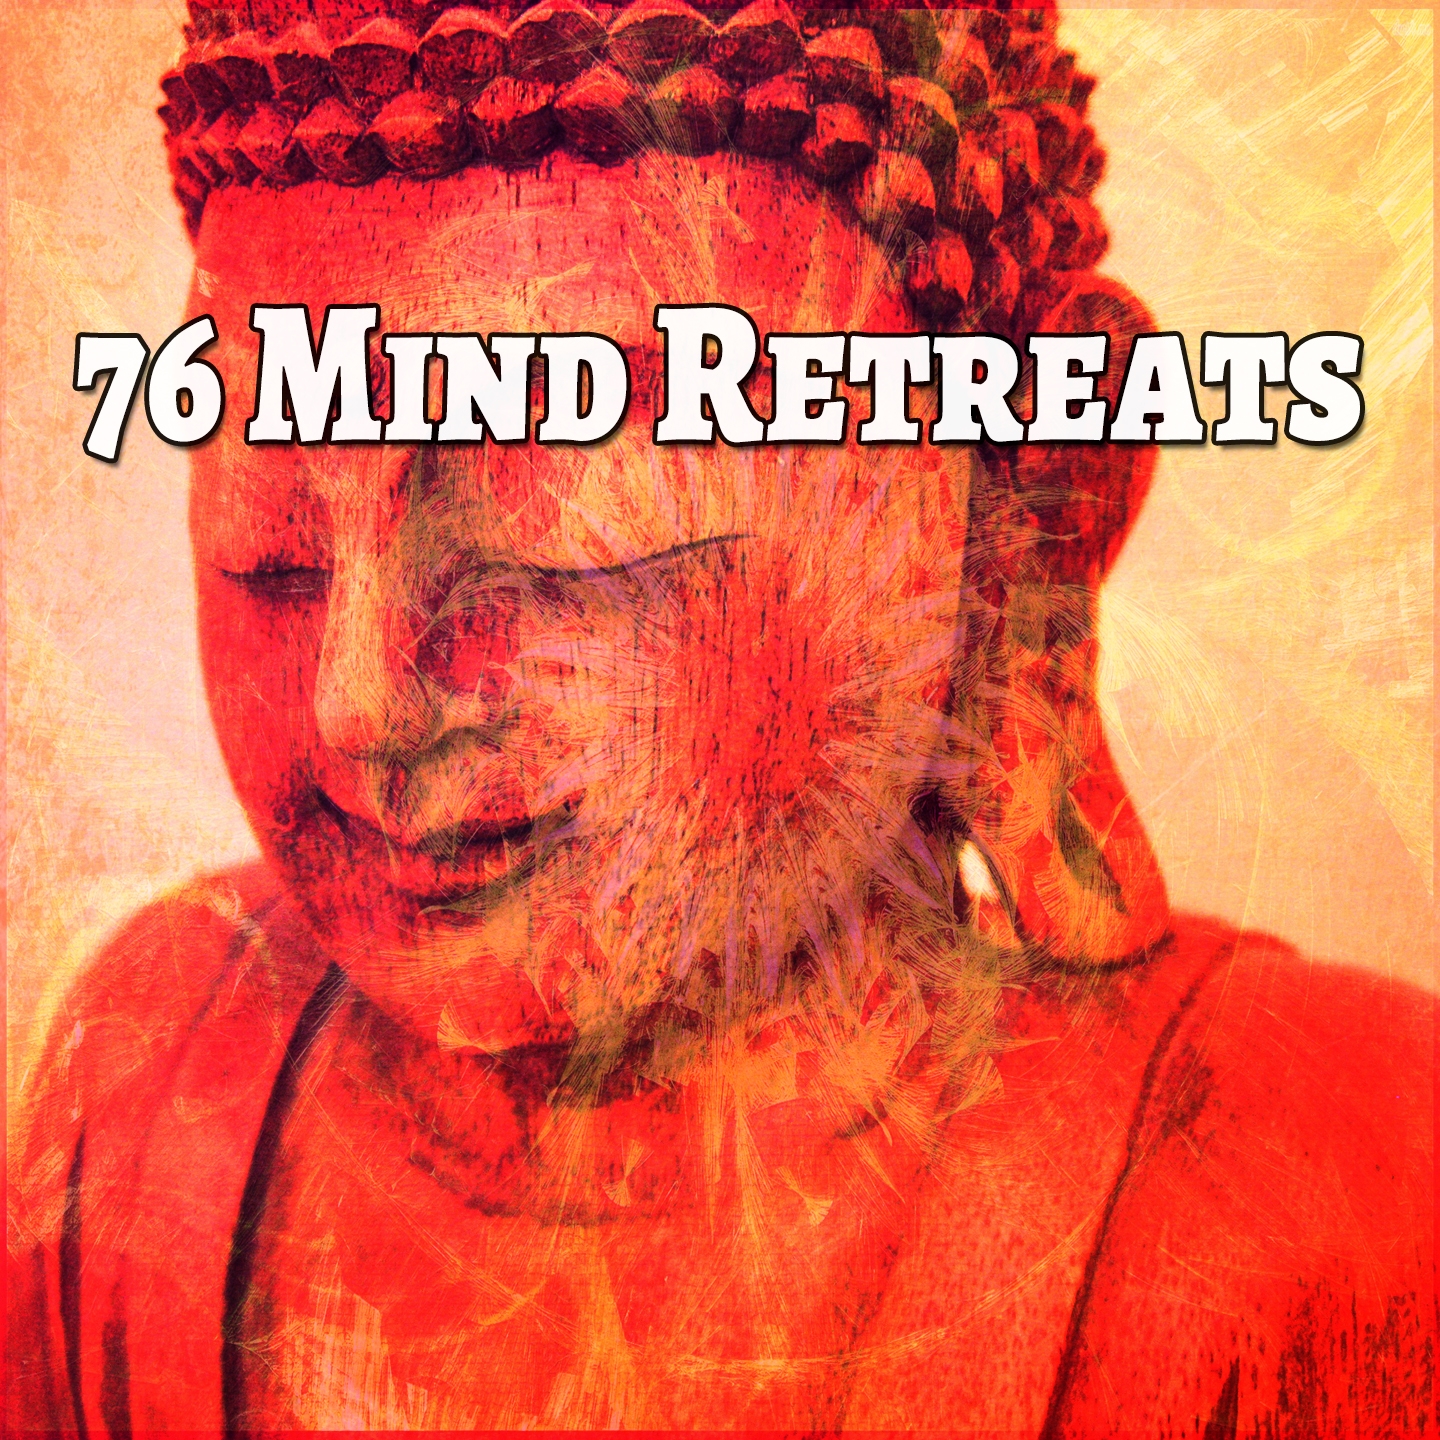 76 Mind Retreats